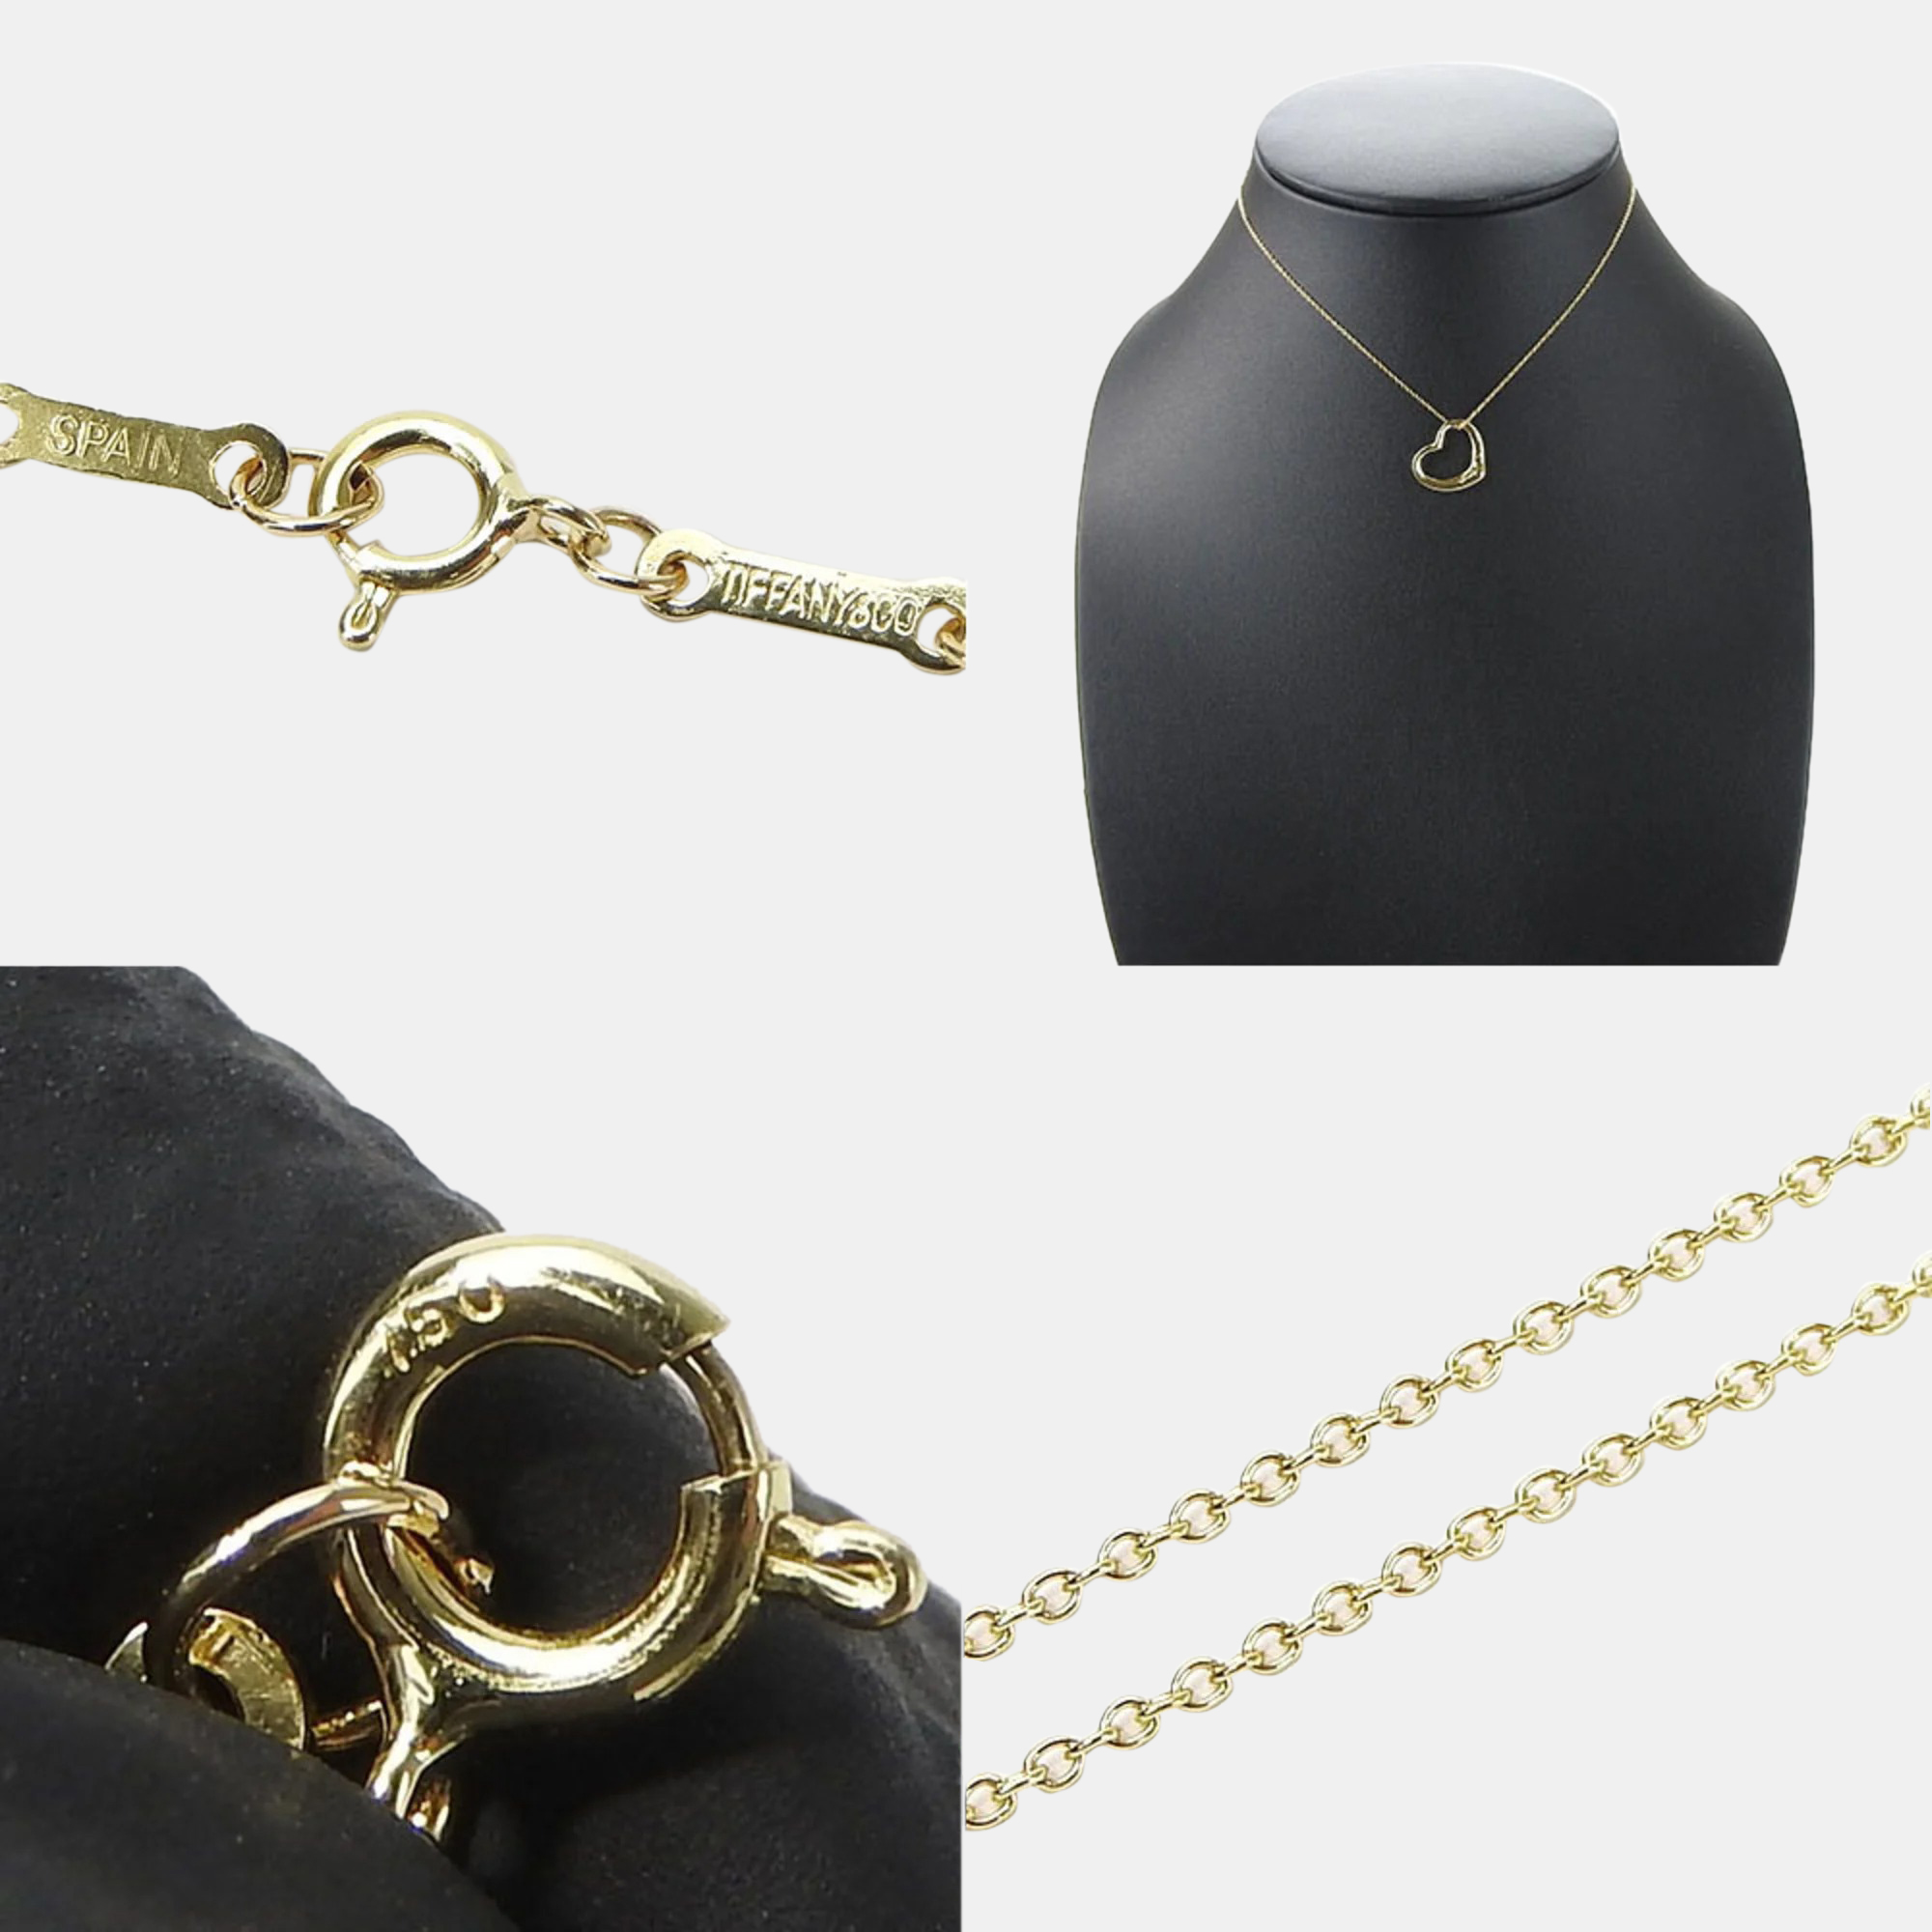 

Tiffany & Co. 18K Yellow Gold Elsa Peretti Open Heart Pendant Necklace